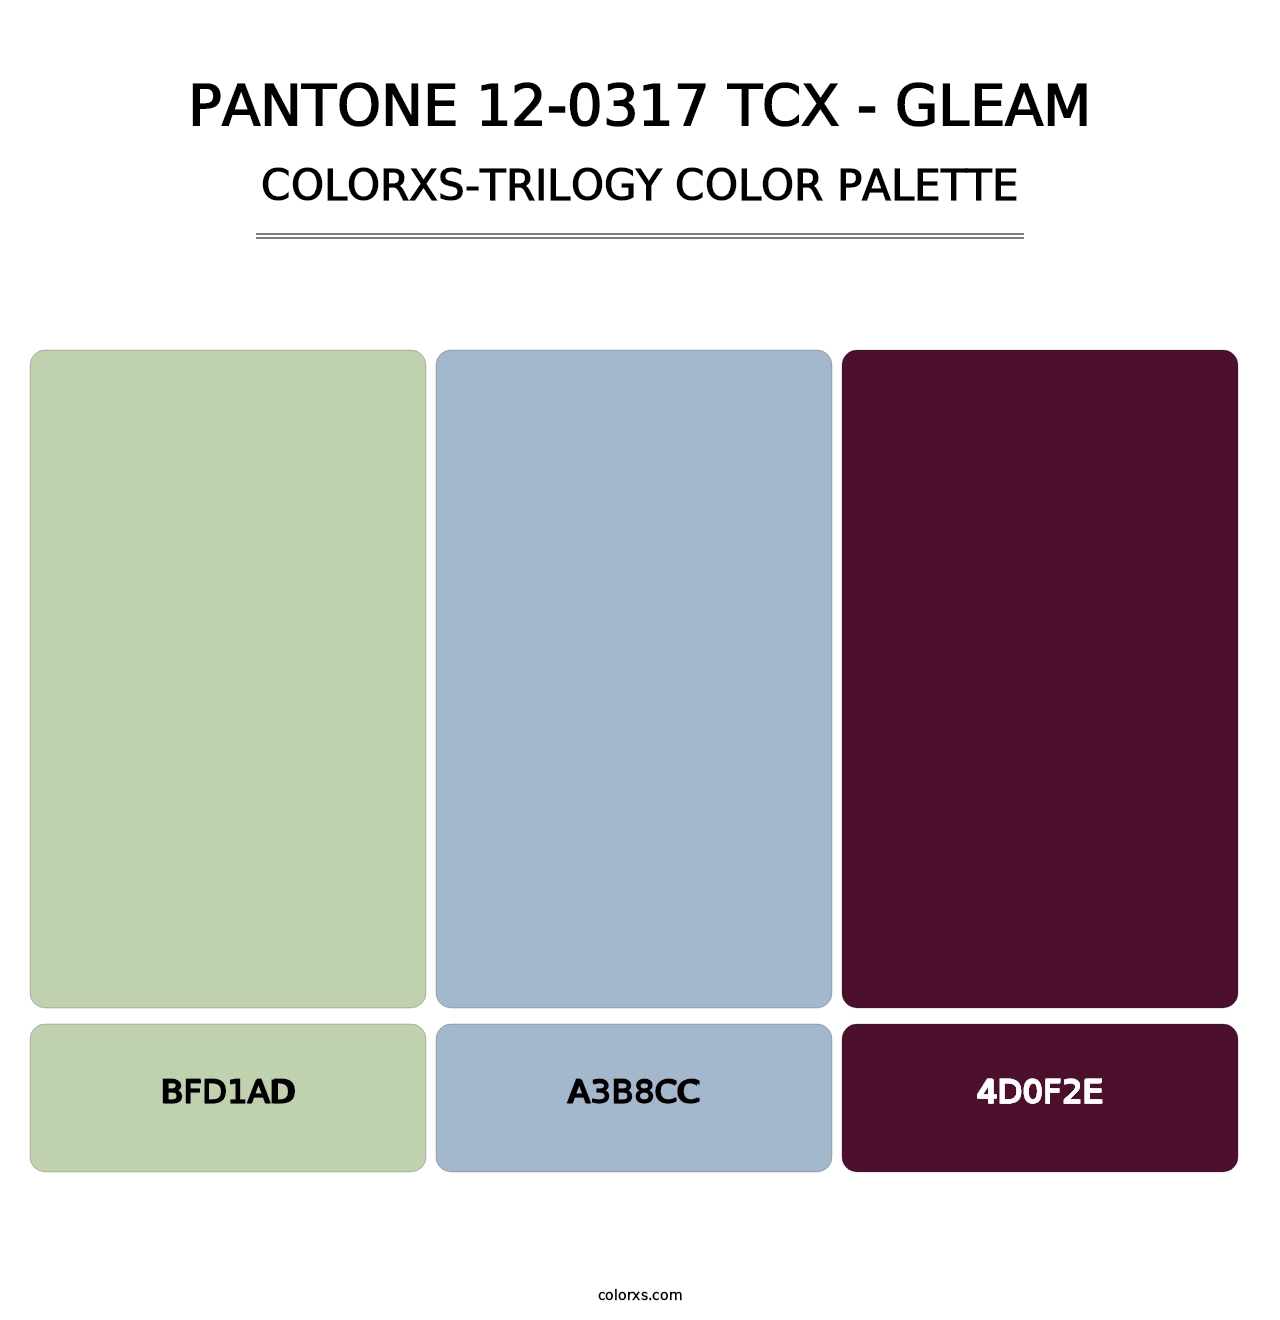 PANTONE 12-0317 TCX - Gleam - Colorxs Trilogy Palette